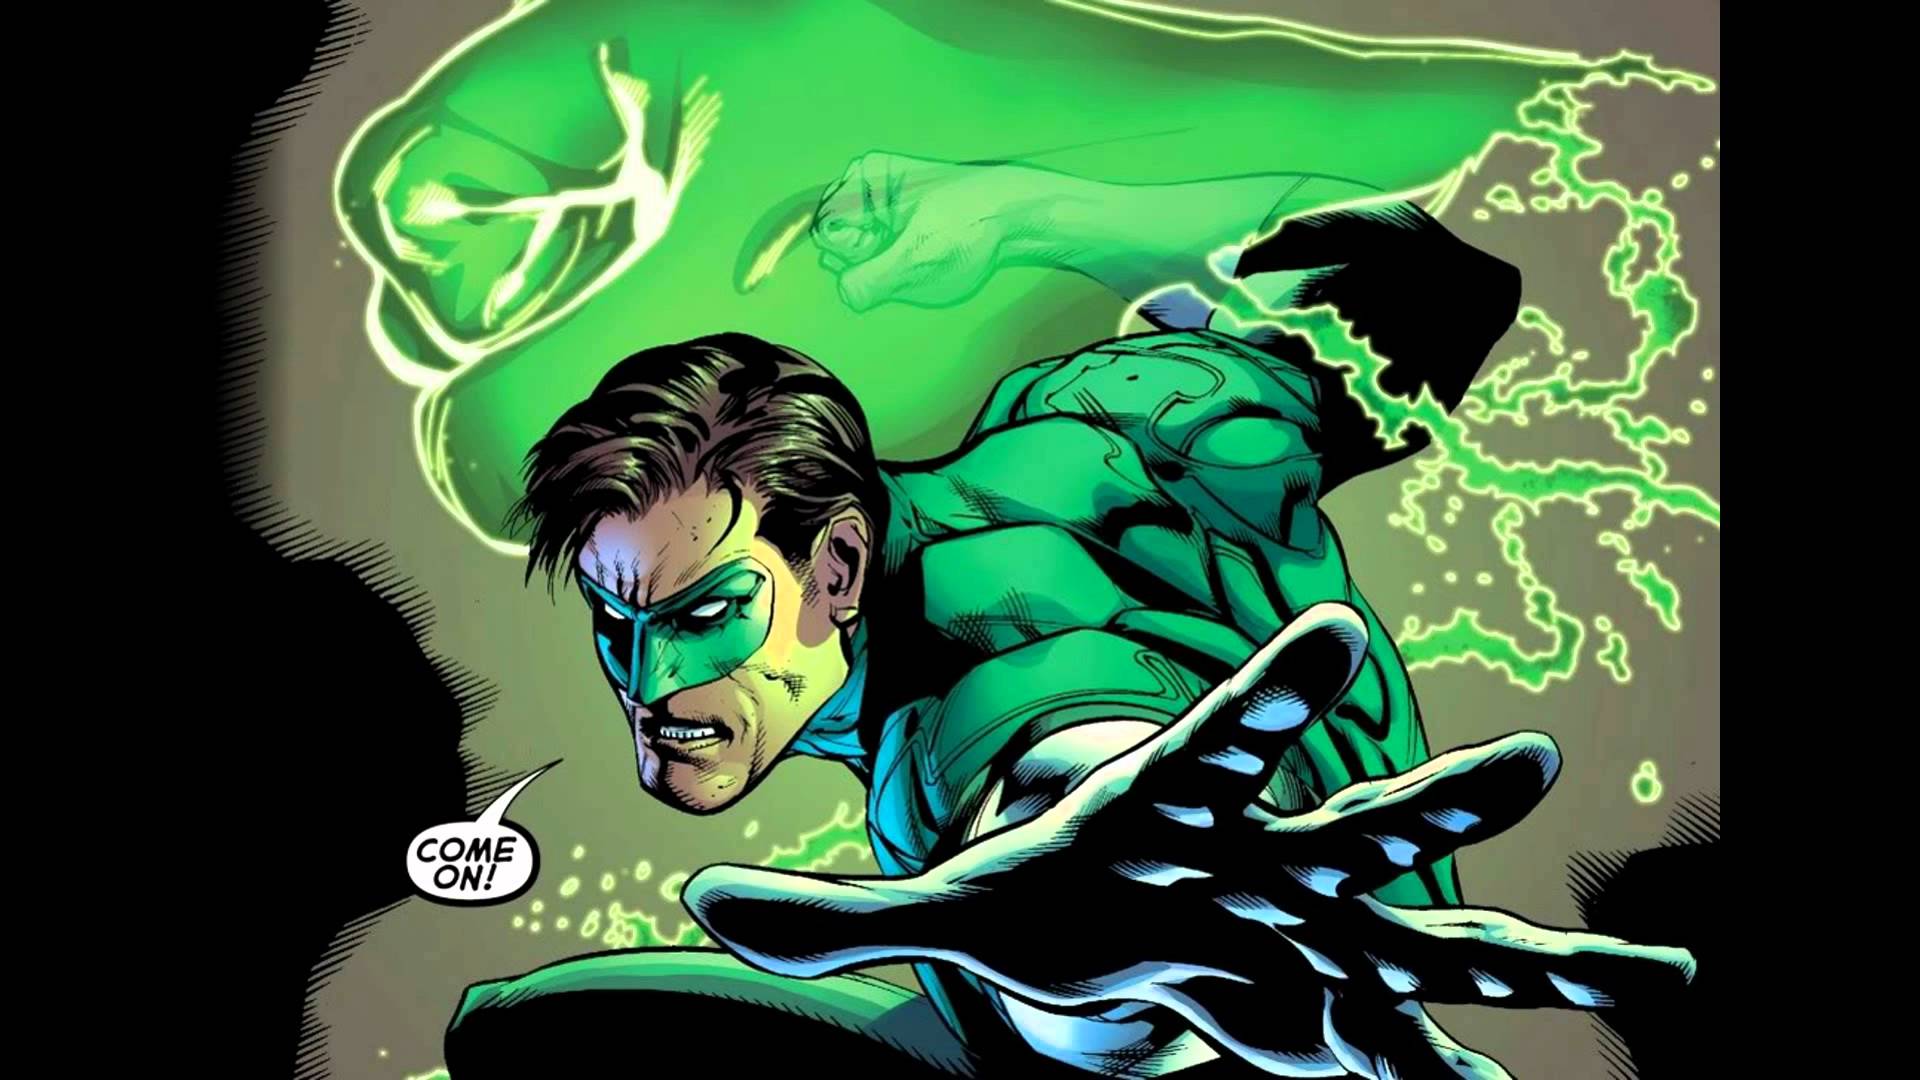 Green Lantern Hal Jordan Injustice Gods Among Us Comic Wallpaper HD For Mobile Samsung Galaxy S4, Wallpaper13.com